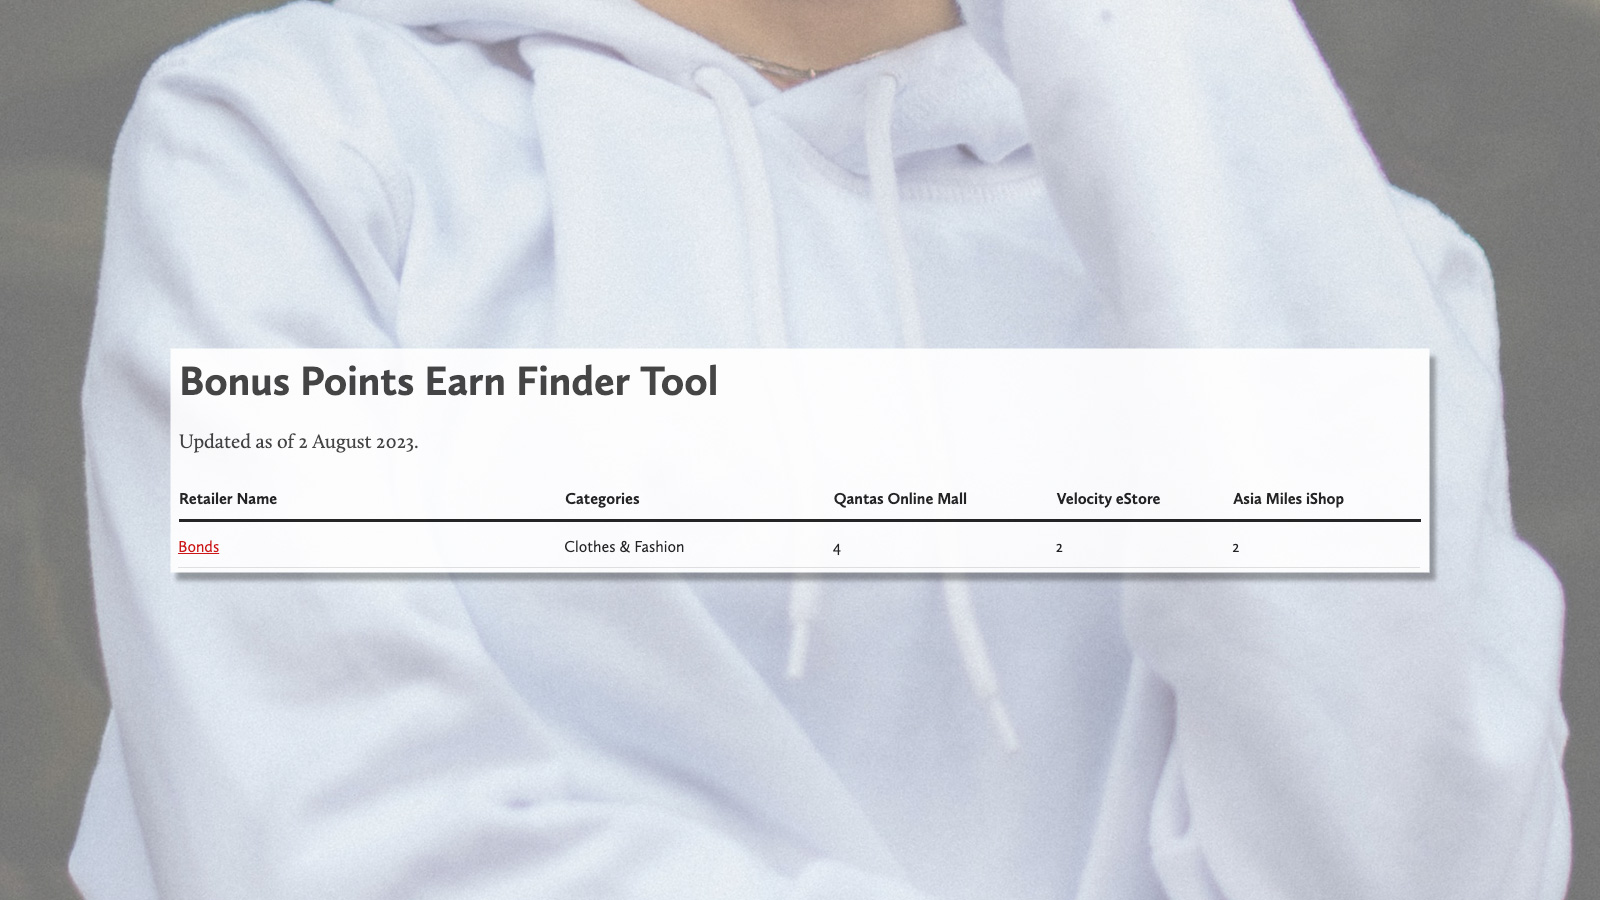 Point Hacks bonus points earn finder tool